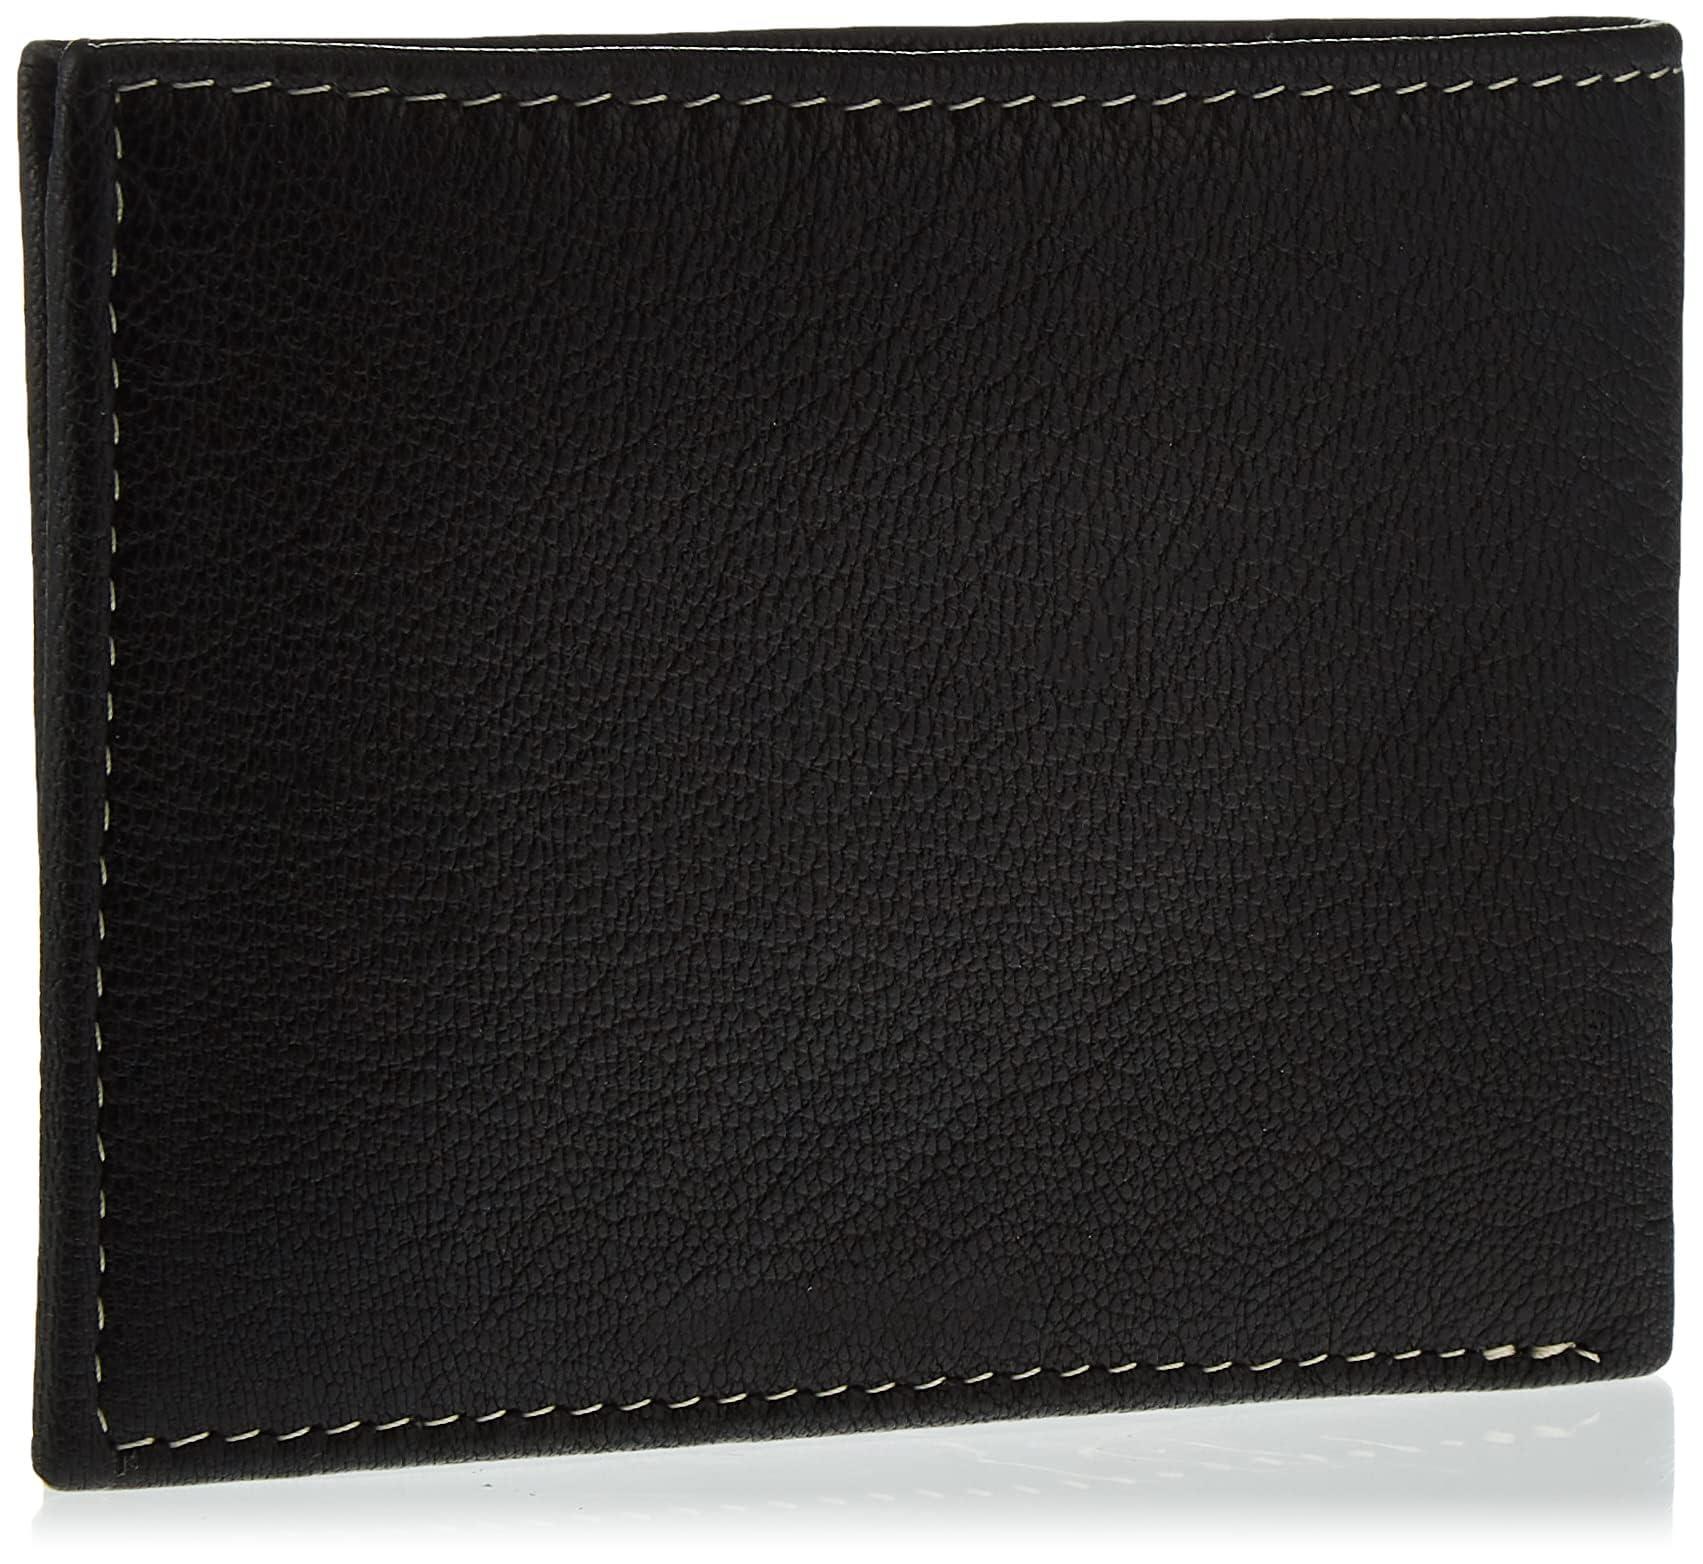 Timberland Men's Blix Slimfold Leather Wallet